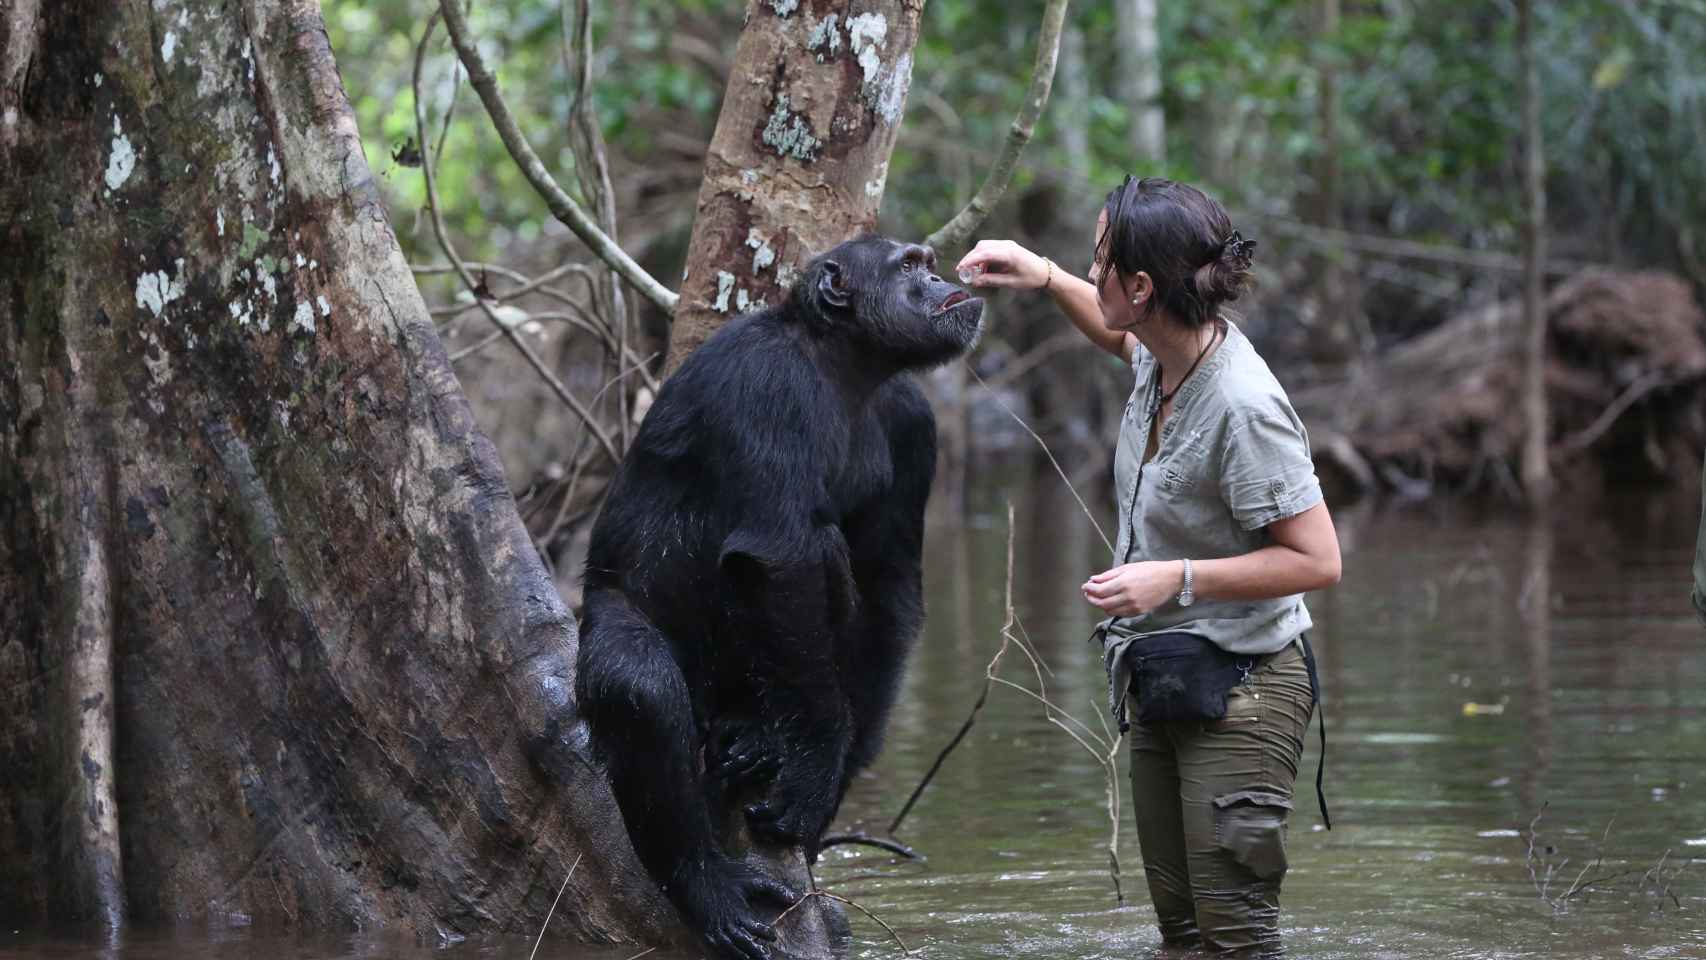 Rebeca con el chimpancé Koungoulou en la selva.